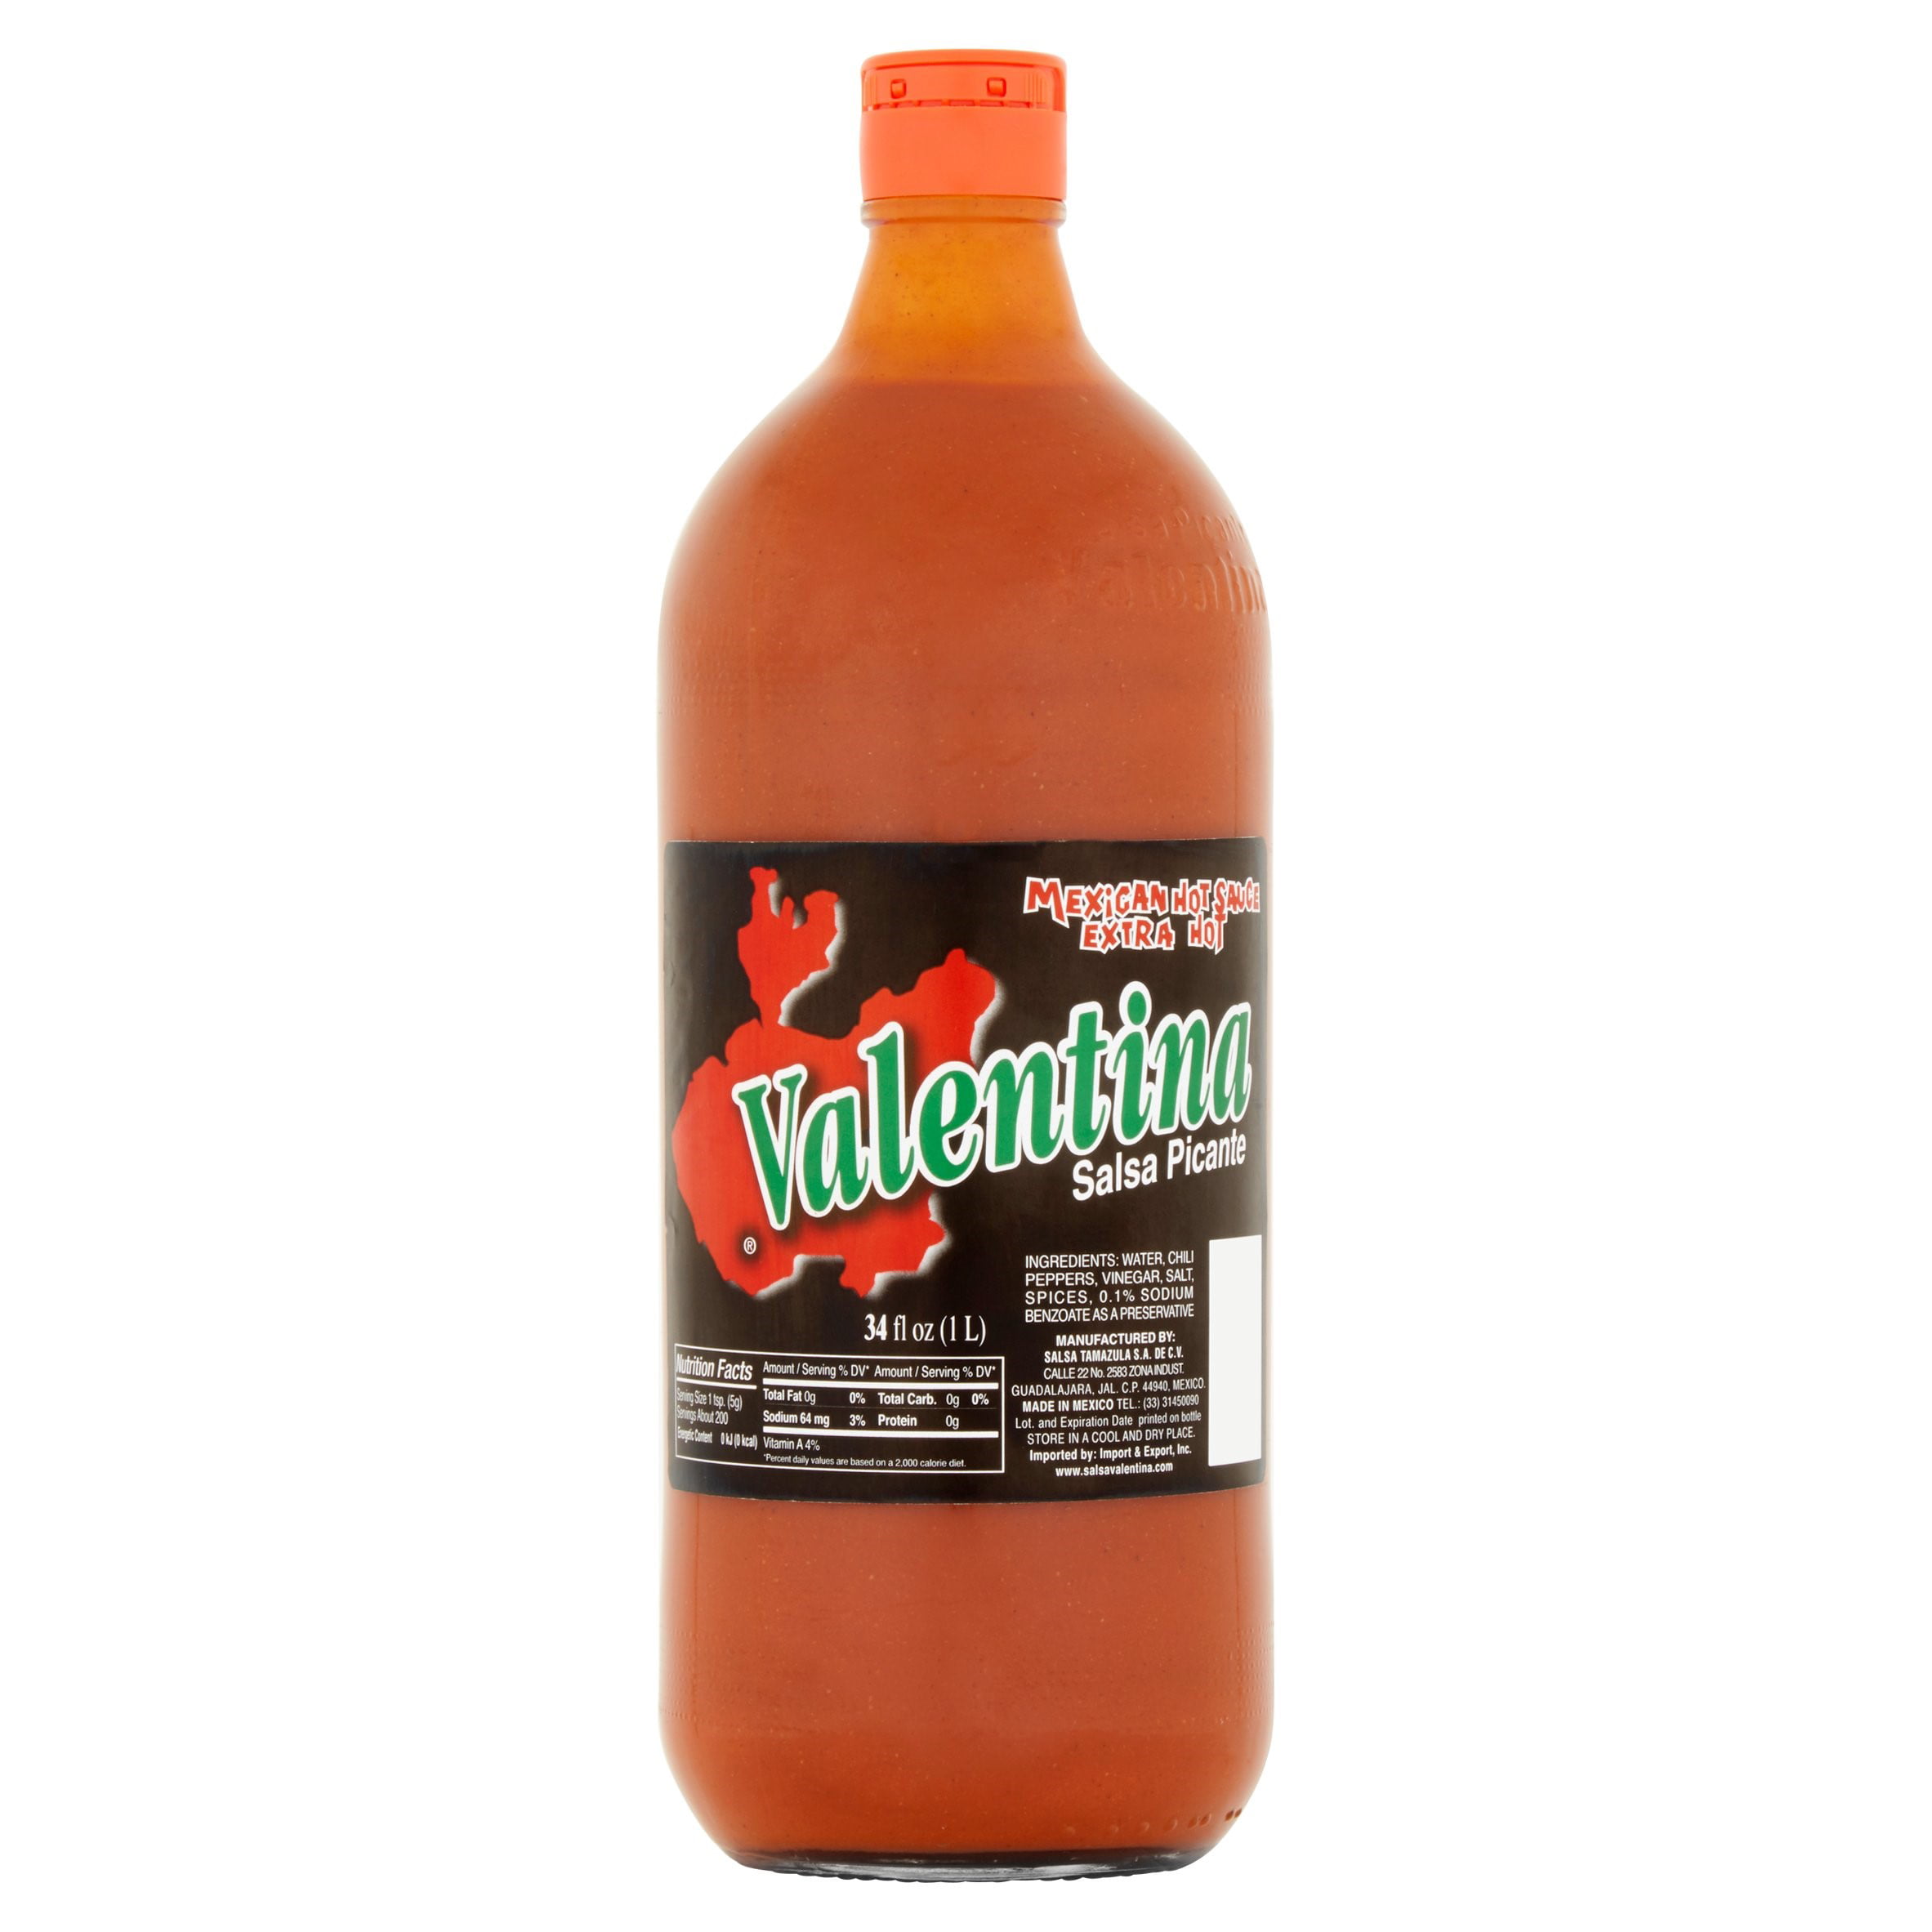 Valentina, Black Label Hot Sauce, 34 oz - Walmart.com.